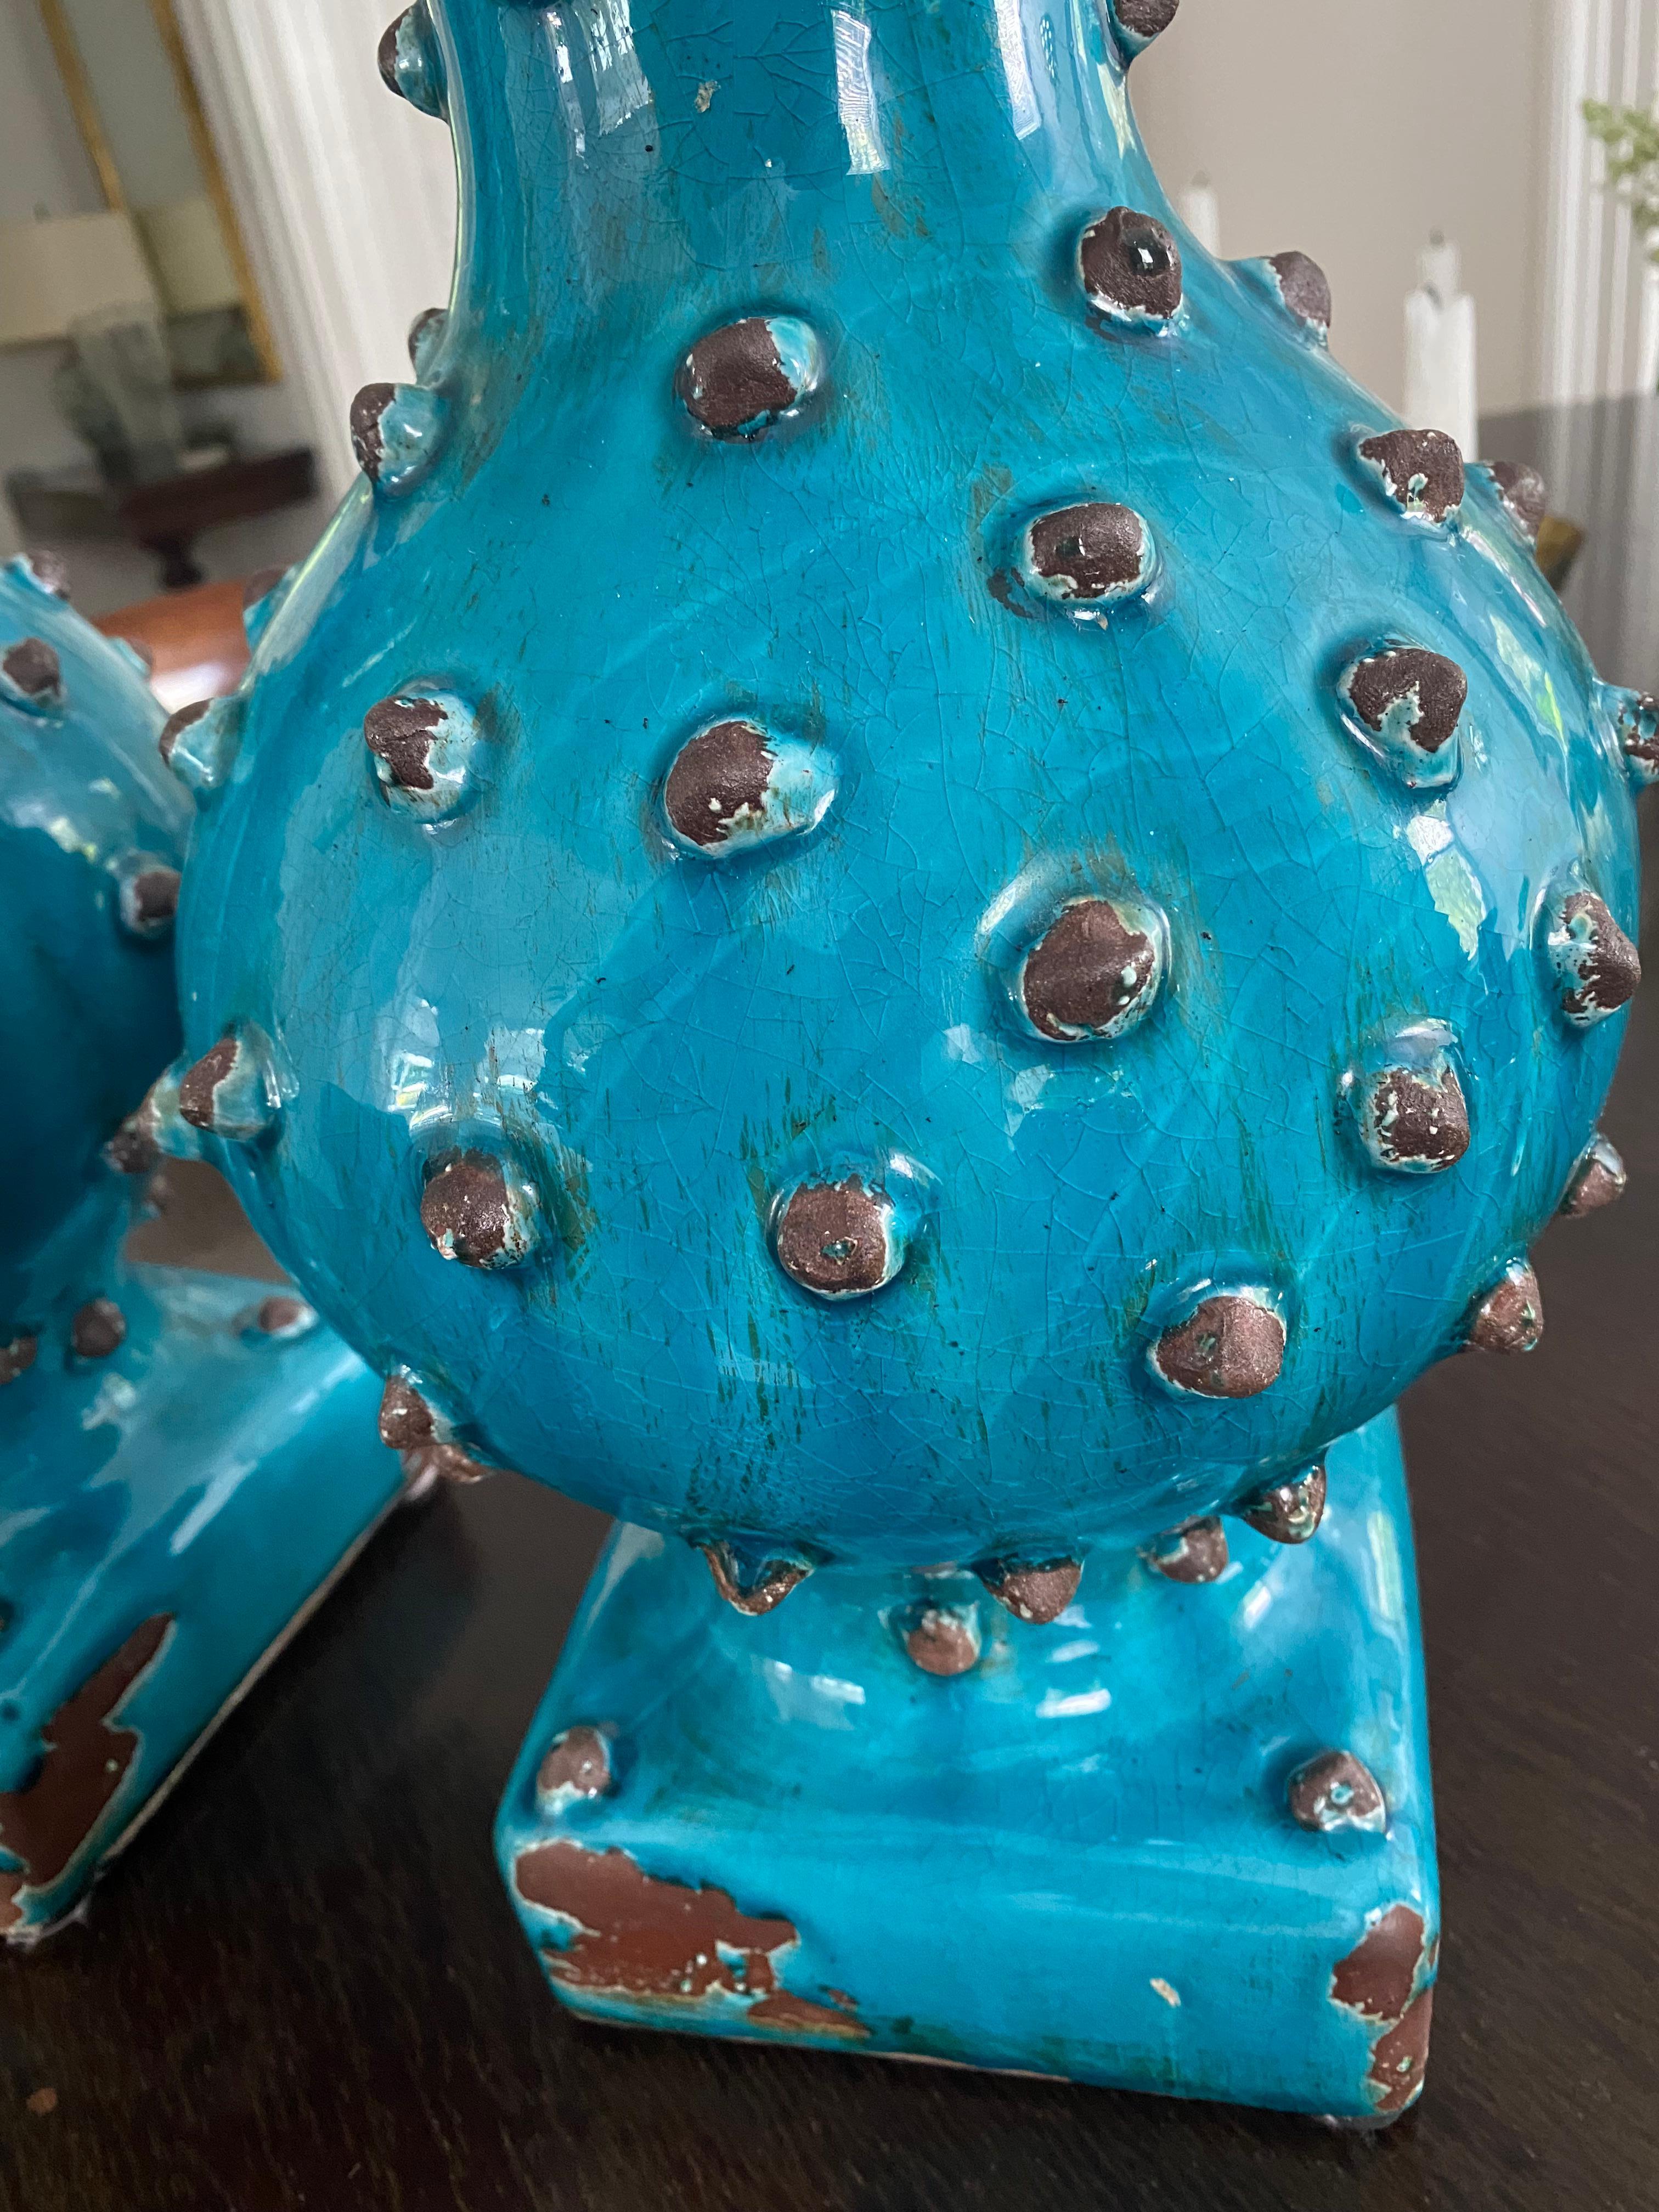 French Pair of Brutalist vases Francois Bernard Paris designer France turquoise  For Sale